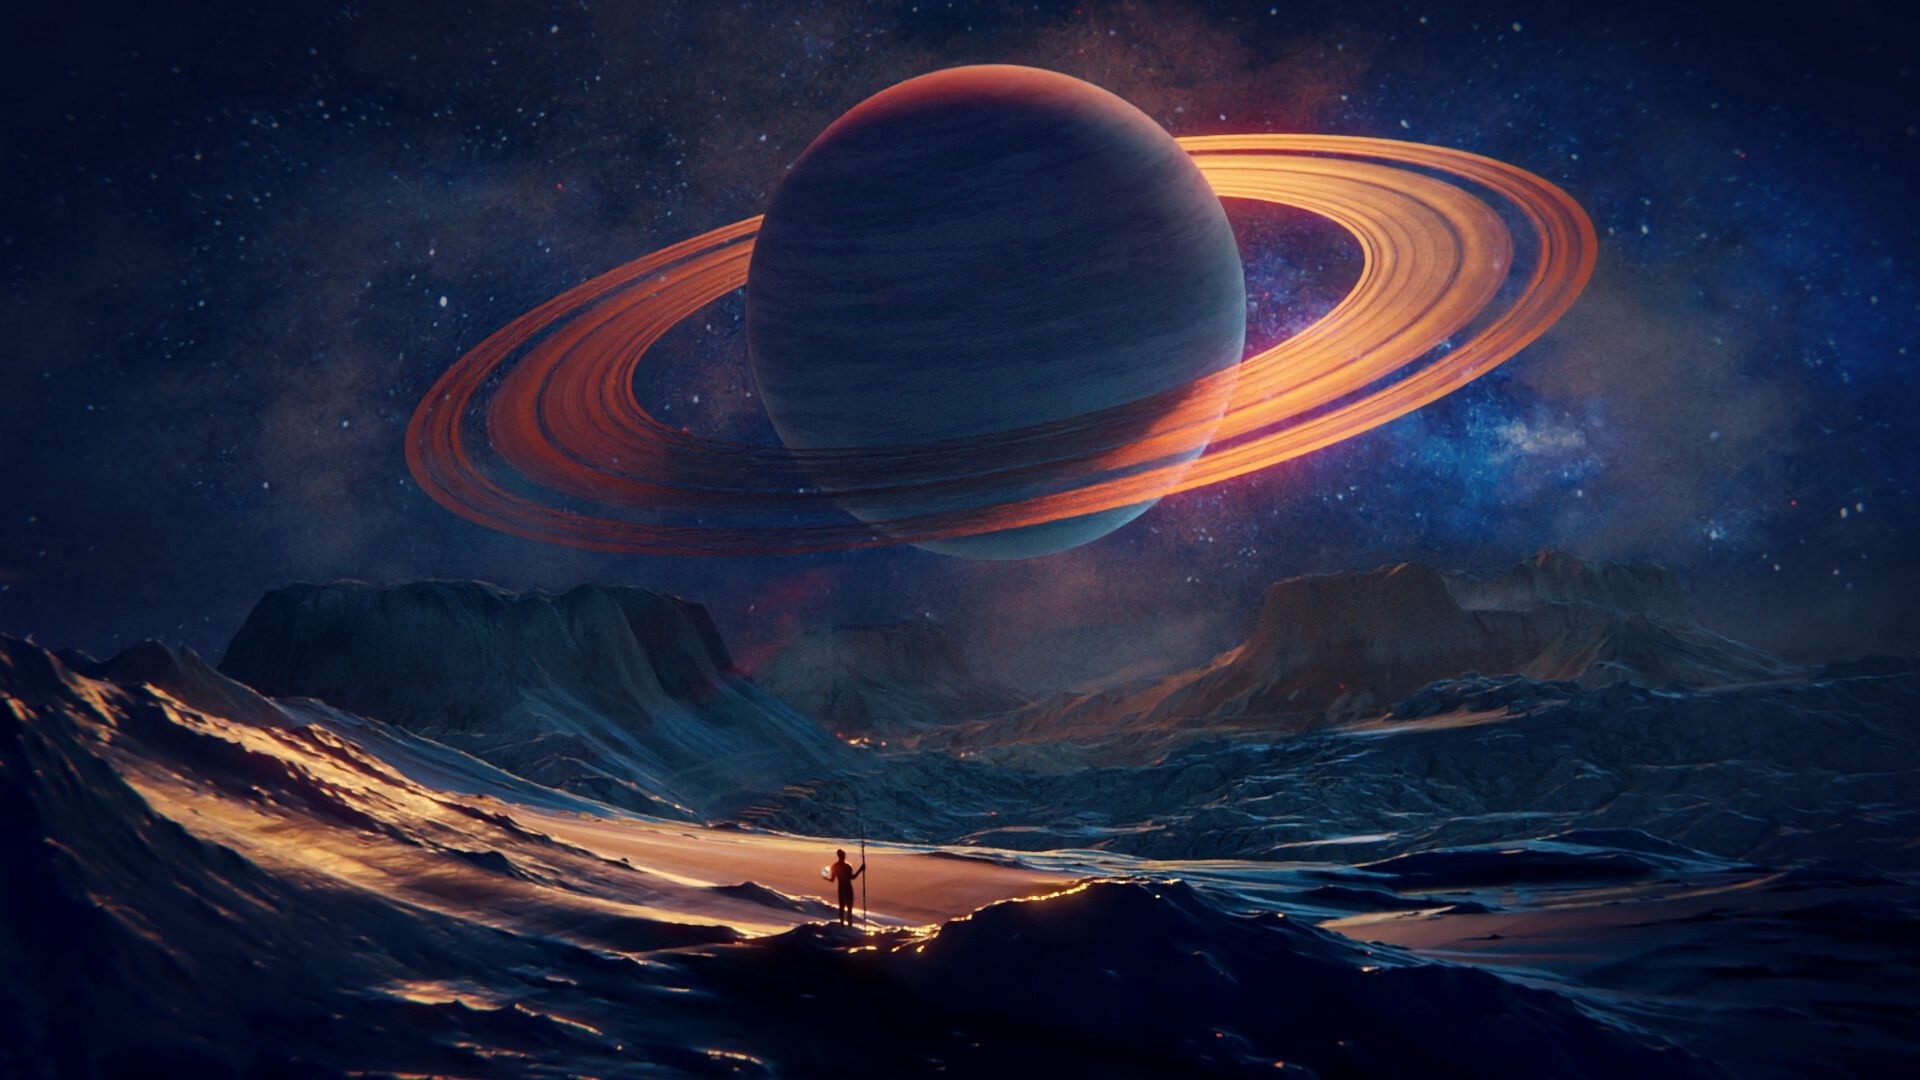 Alien Planet Art Image